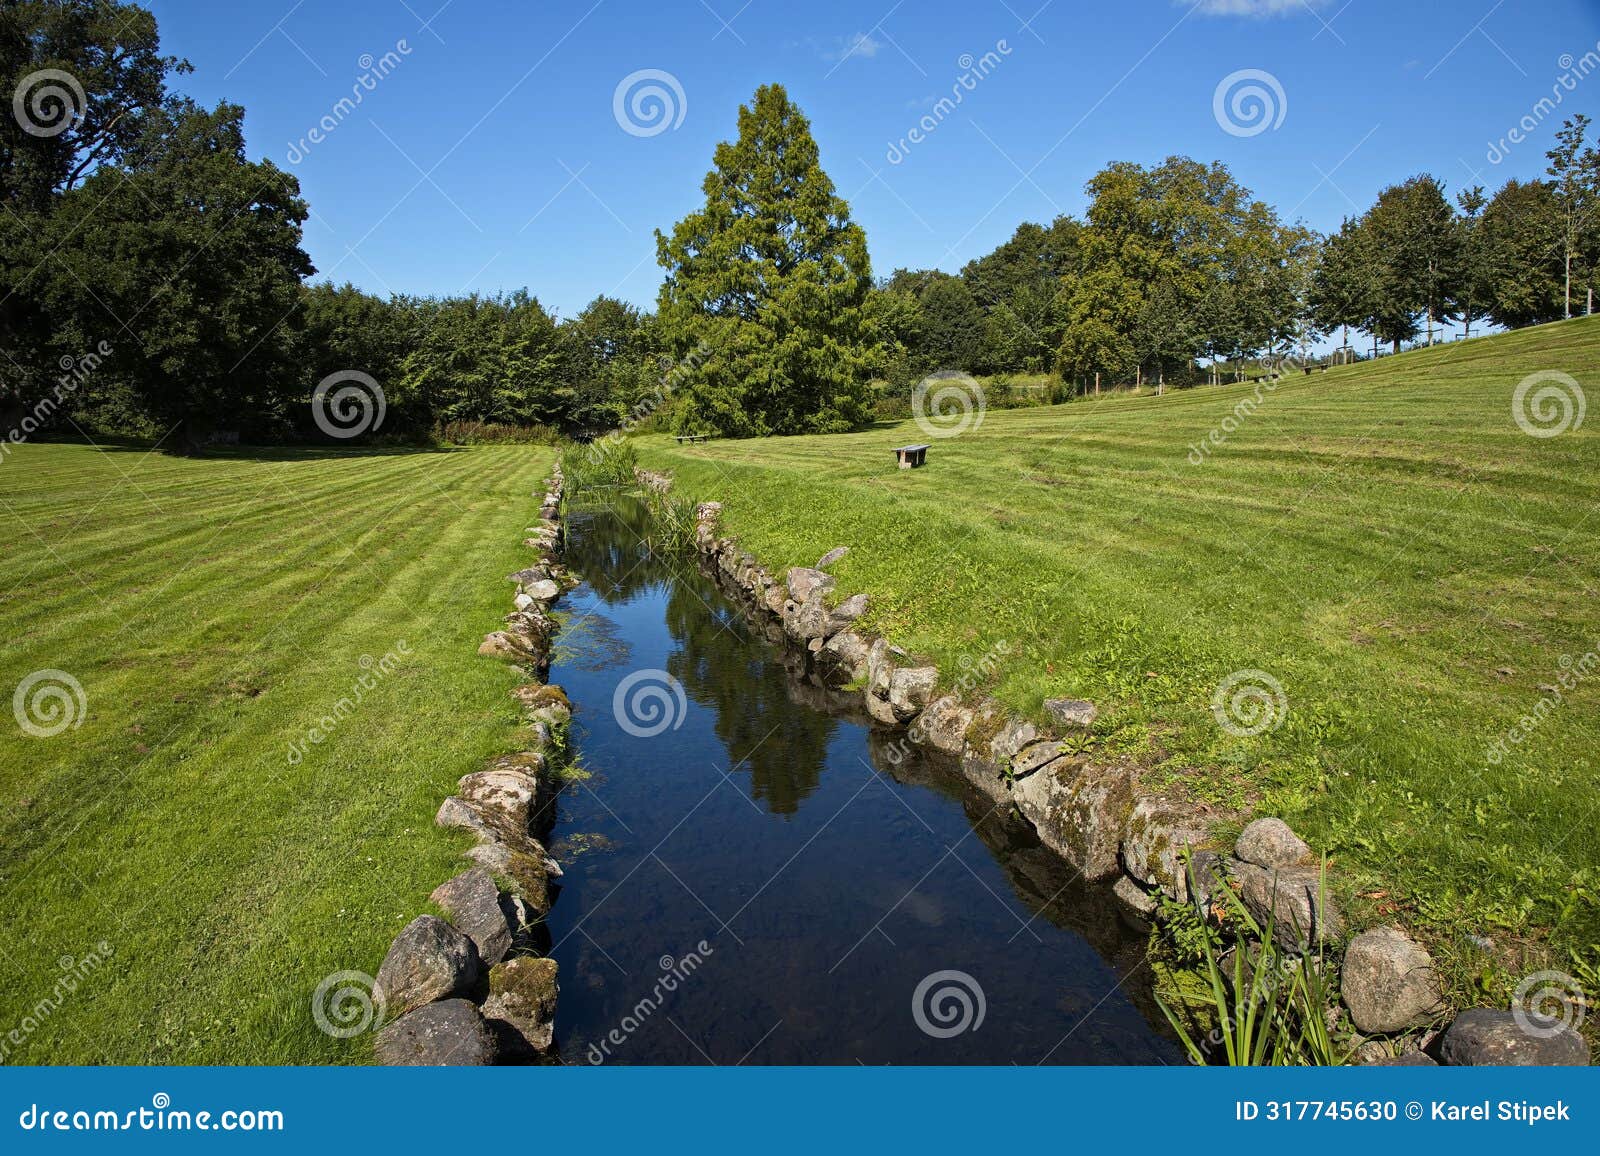 creek in the palace garden of egeskov castle near kvaerndrup, island of funen, denmark